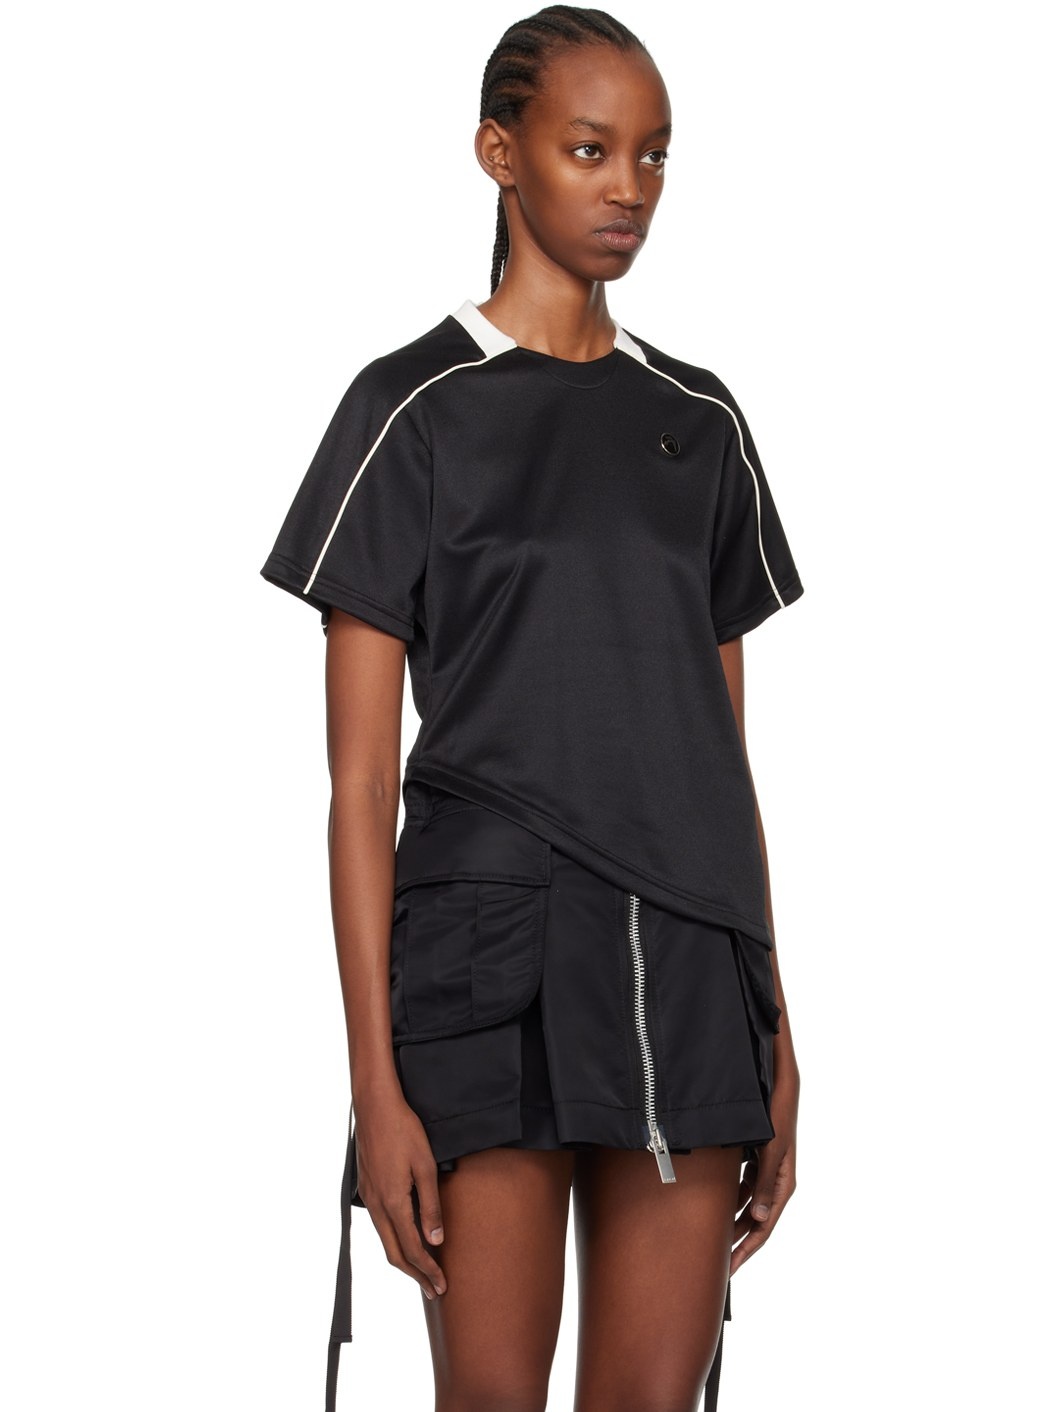 Black Football T-Shirt - 2